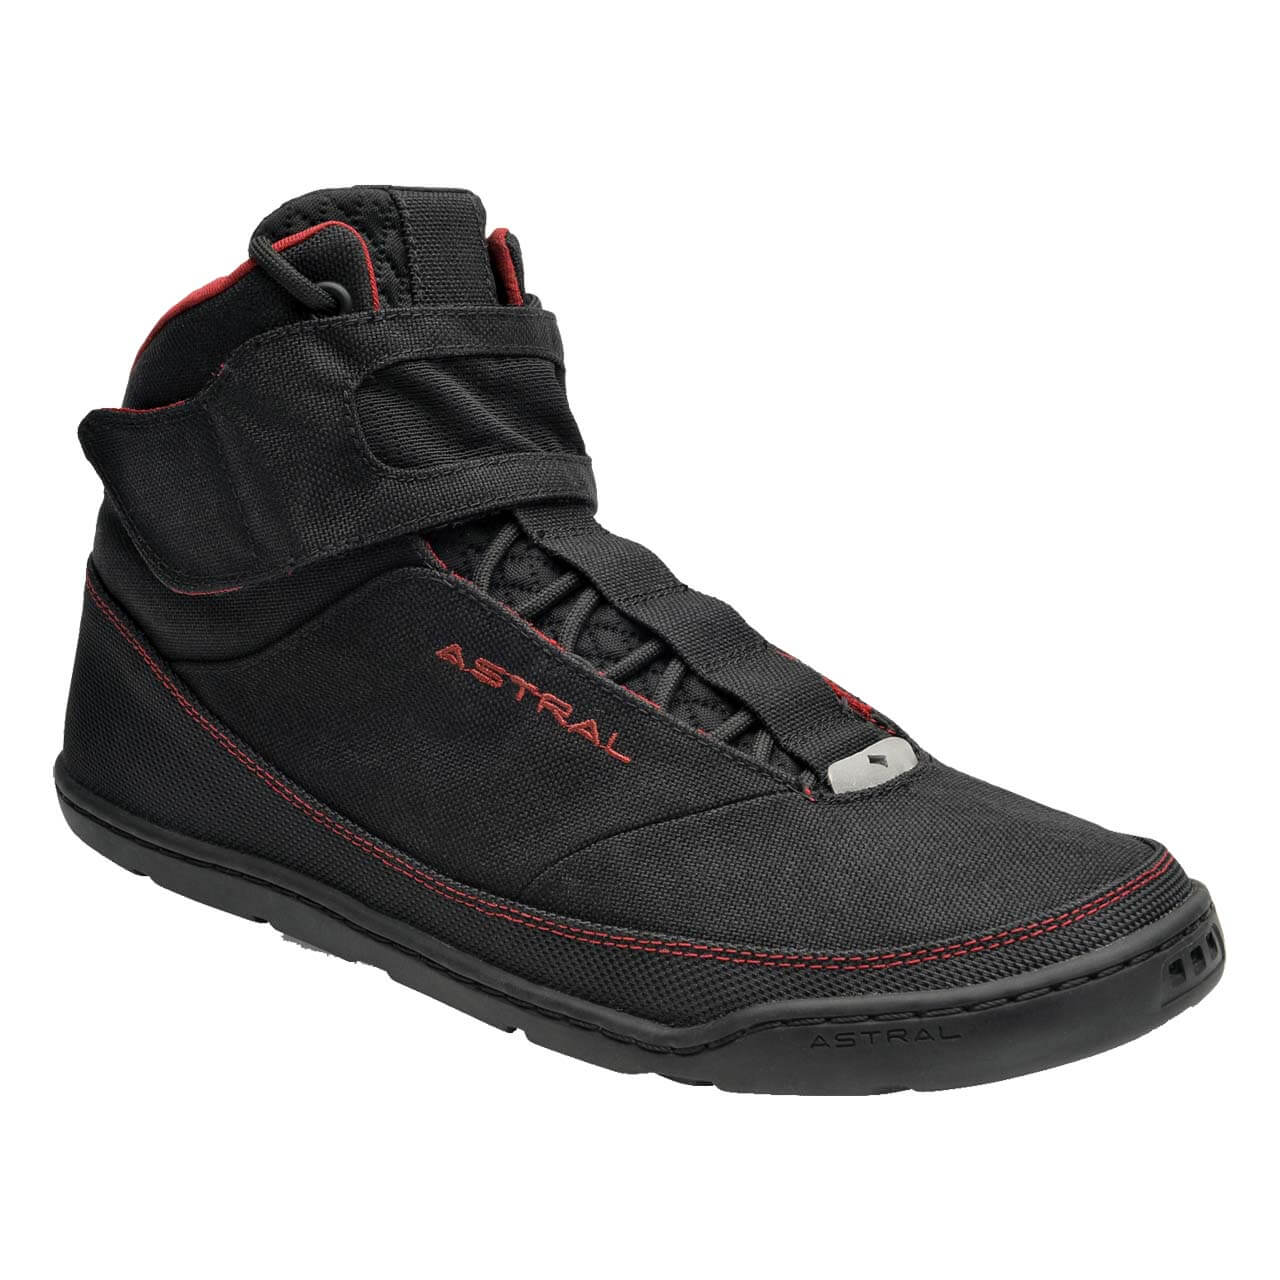 Astral Hiyak Kajak Boots - Black, US 7 / EU 40